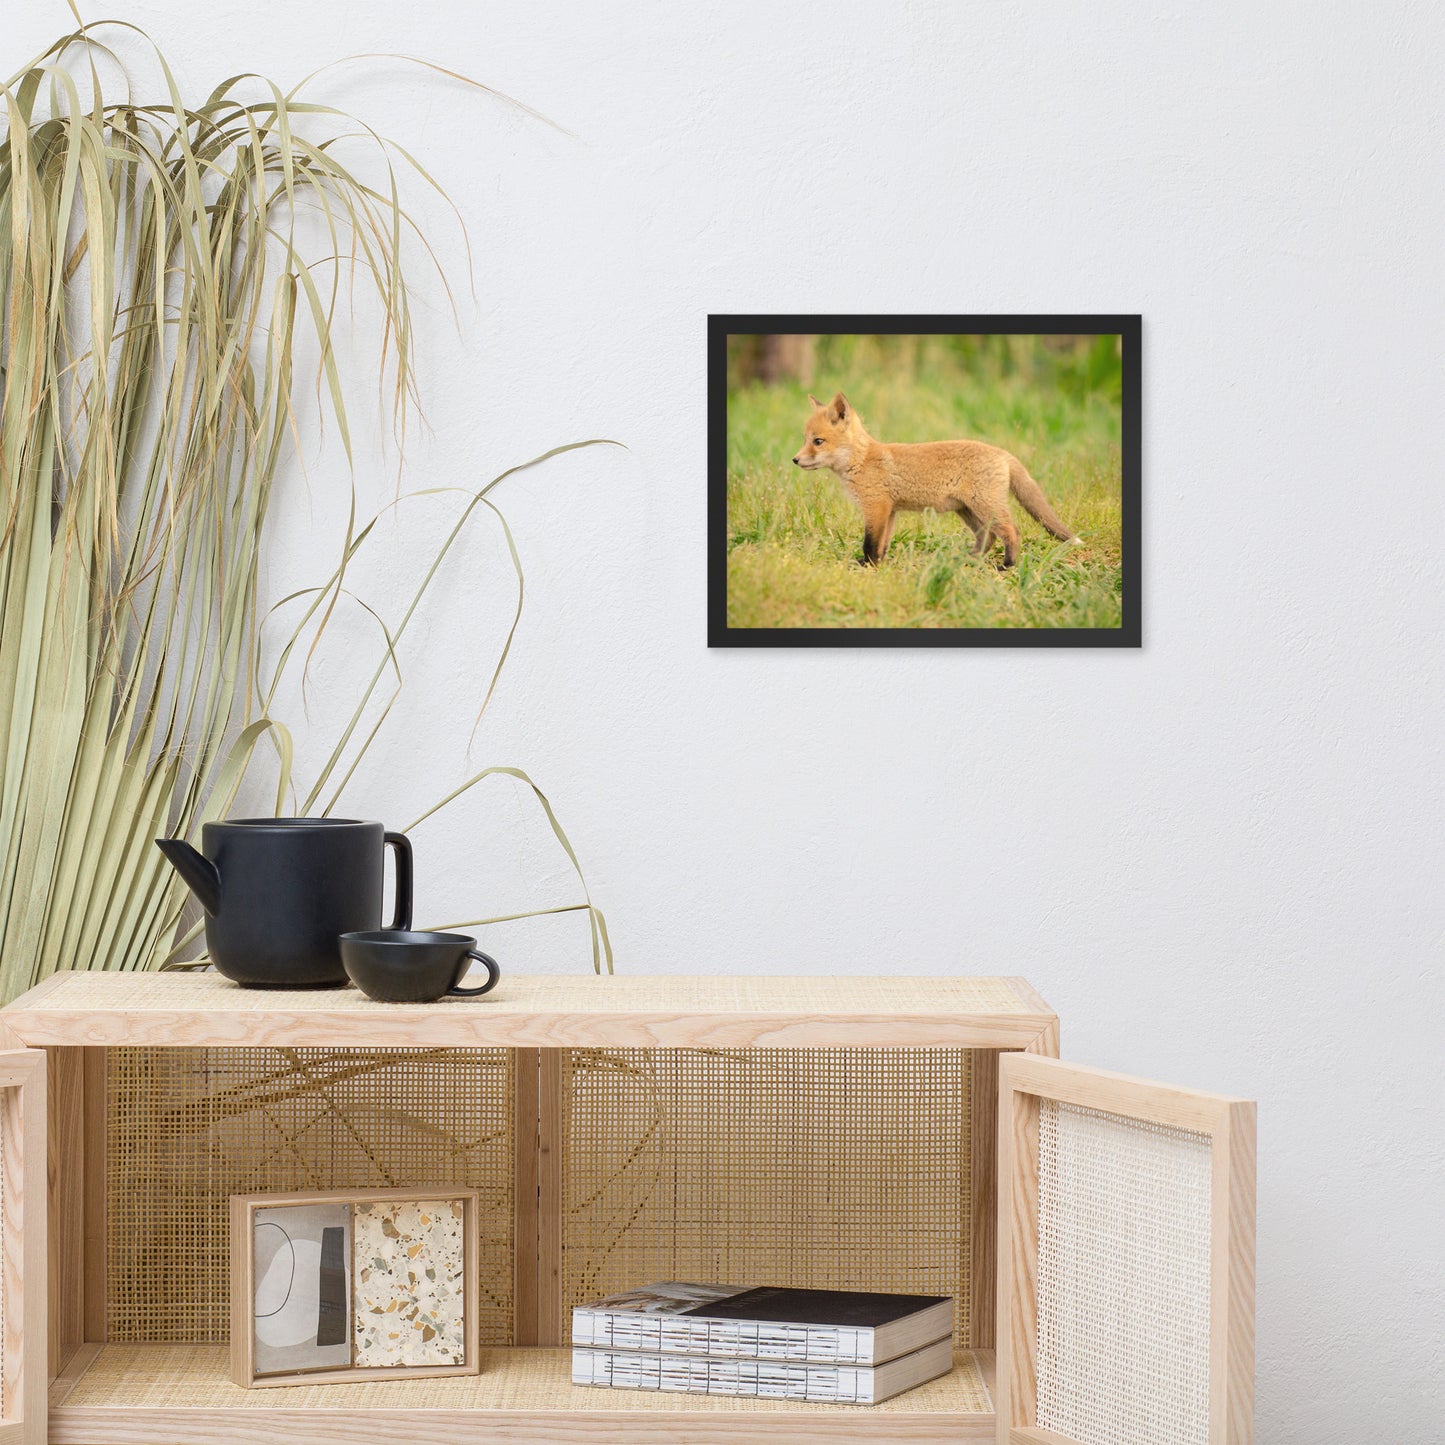 Nursery Art: Baby Fox Pup In Meadow/ Animal / Wildlife / Nature Photographic Artwork - Framed Artwork - Wall Decor